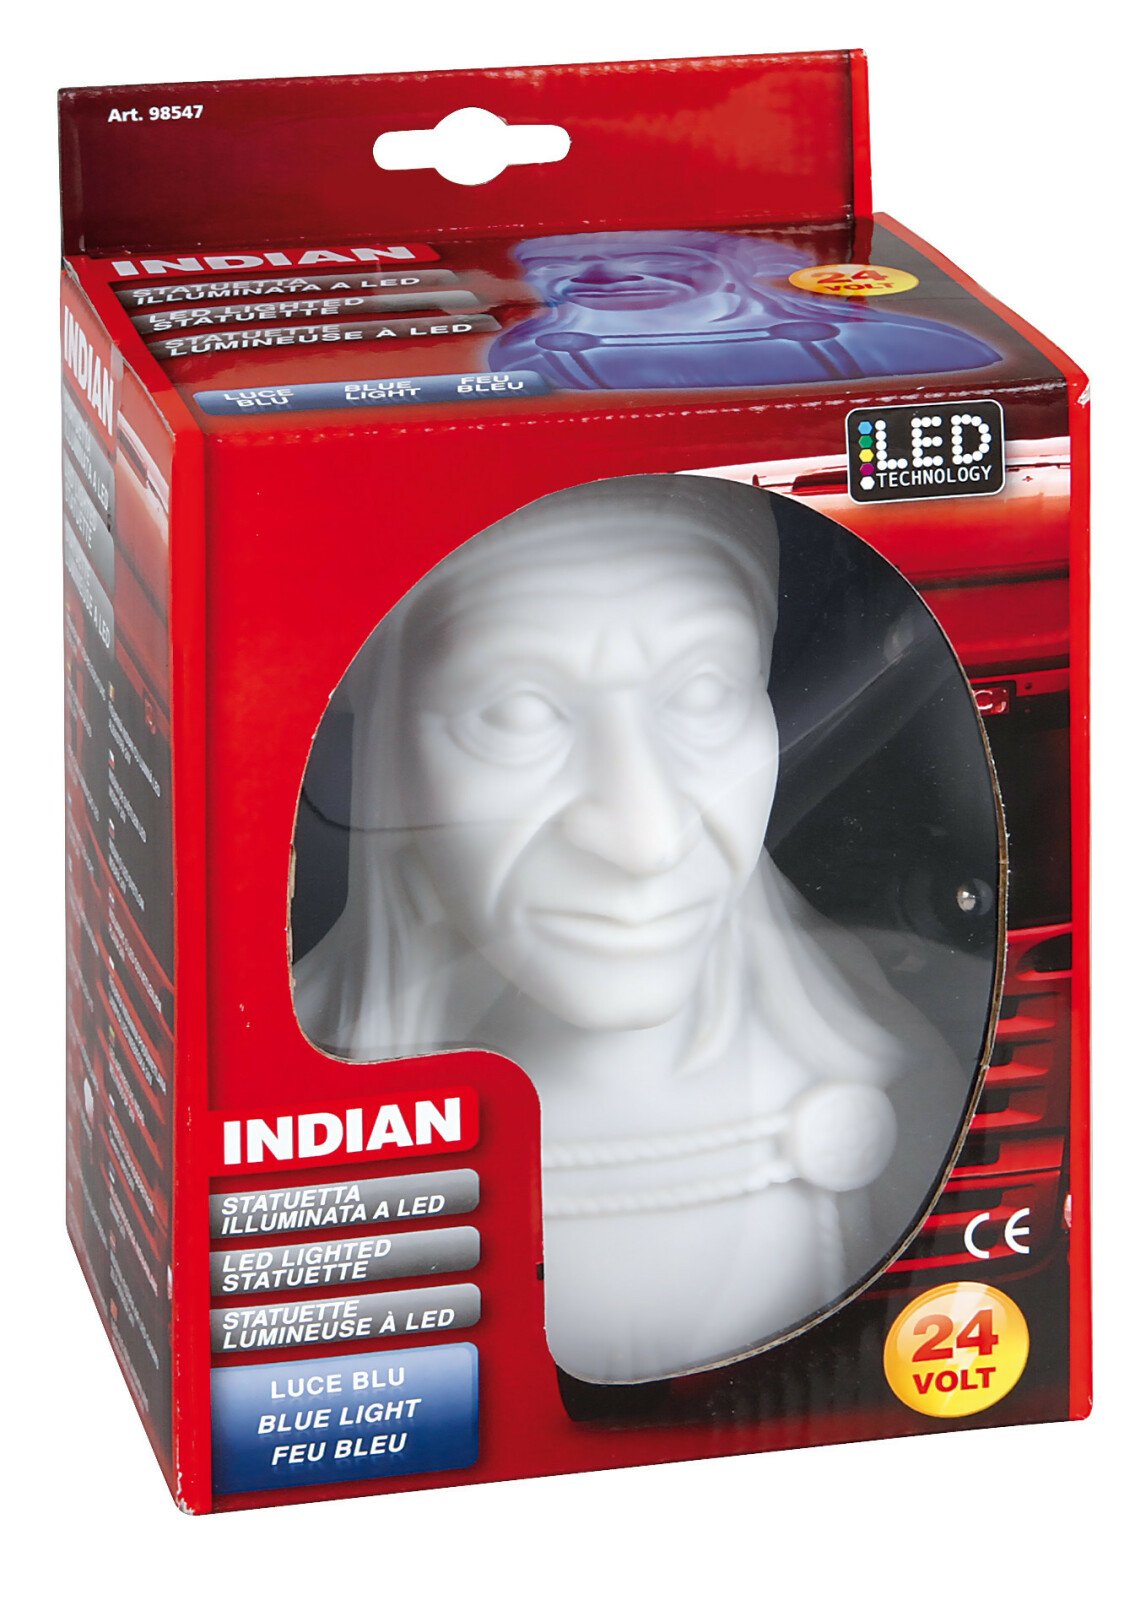 Indian, Led lighted statuette, 24V thumb